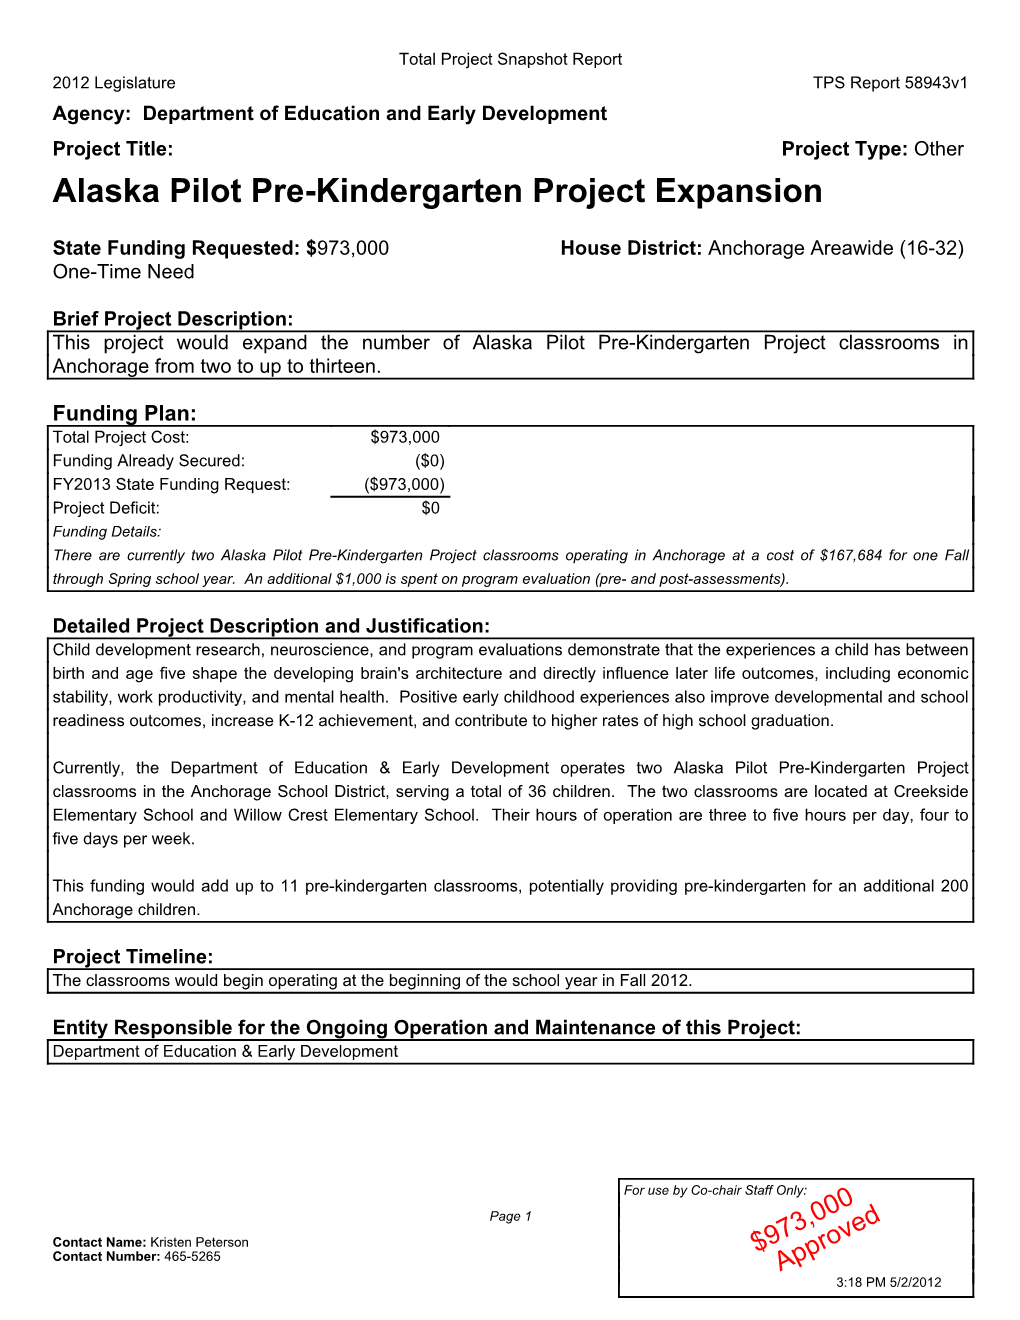 Alaska Pilot Pre-Kindergarten Project Expansion